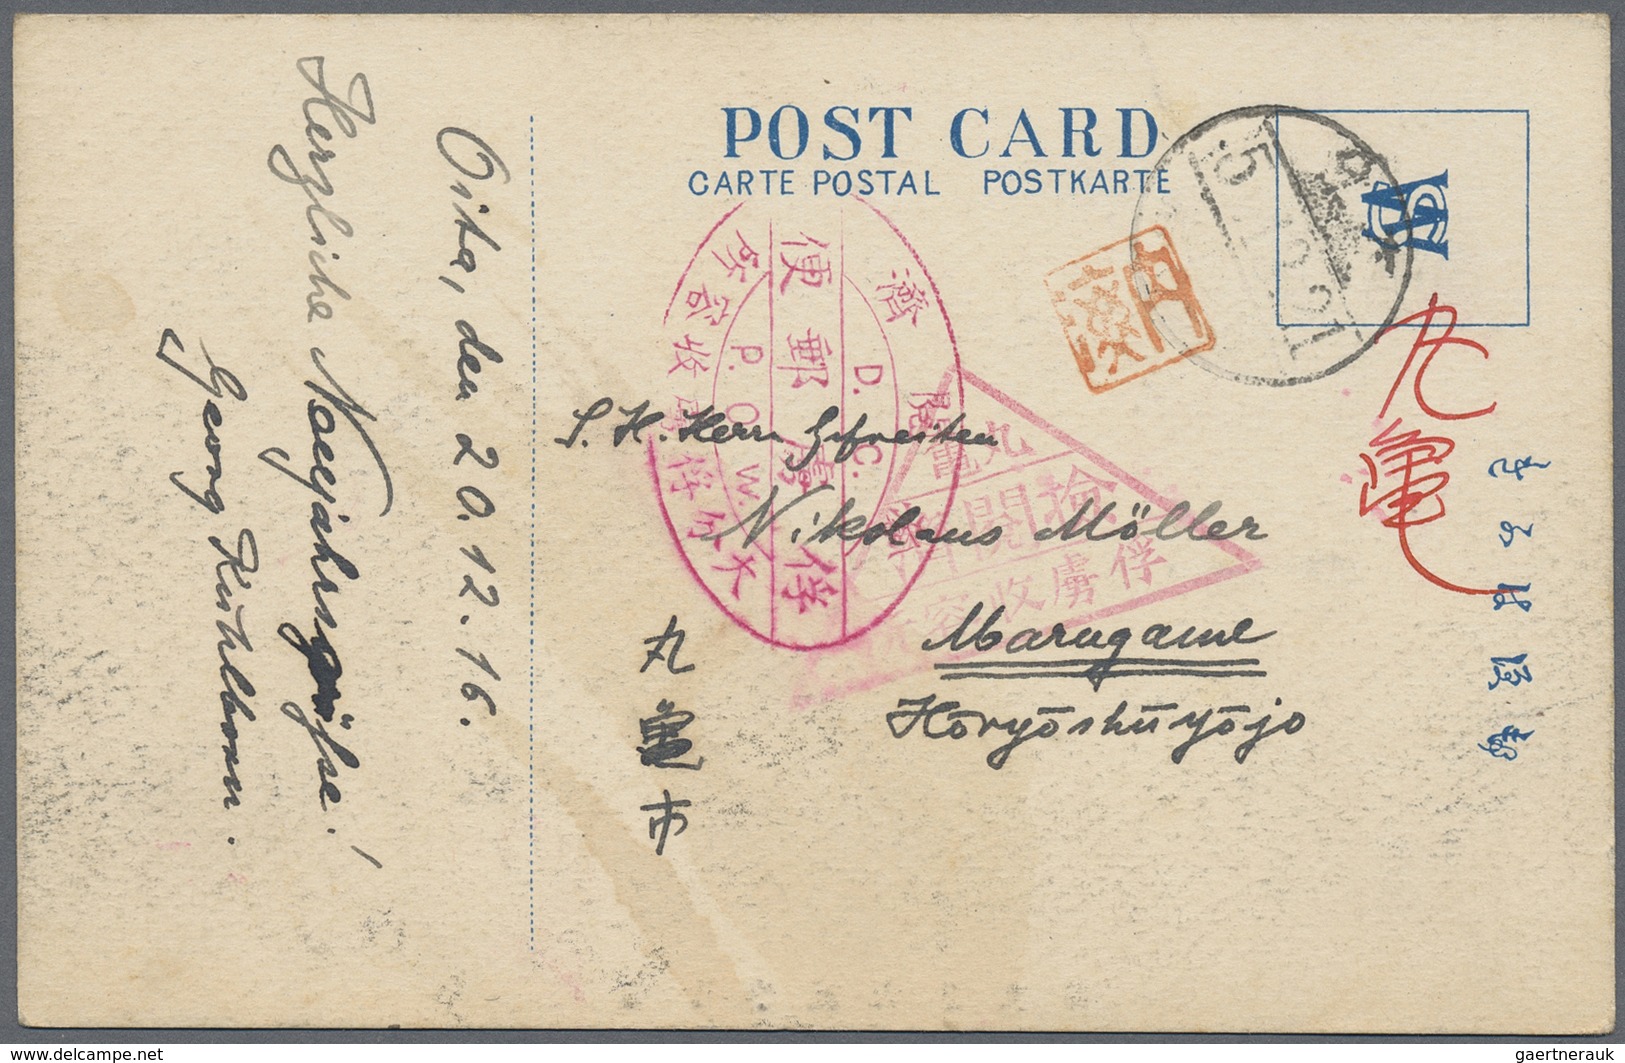 Lagerpost Tsingtau: Oita, 1916/18, Five Ppc:  Intercamp Cards (3) To Bando, Marugame And To Aonogaha - Chine (bureaux)